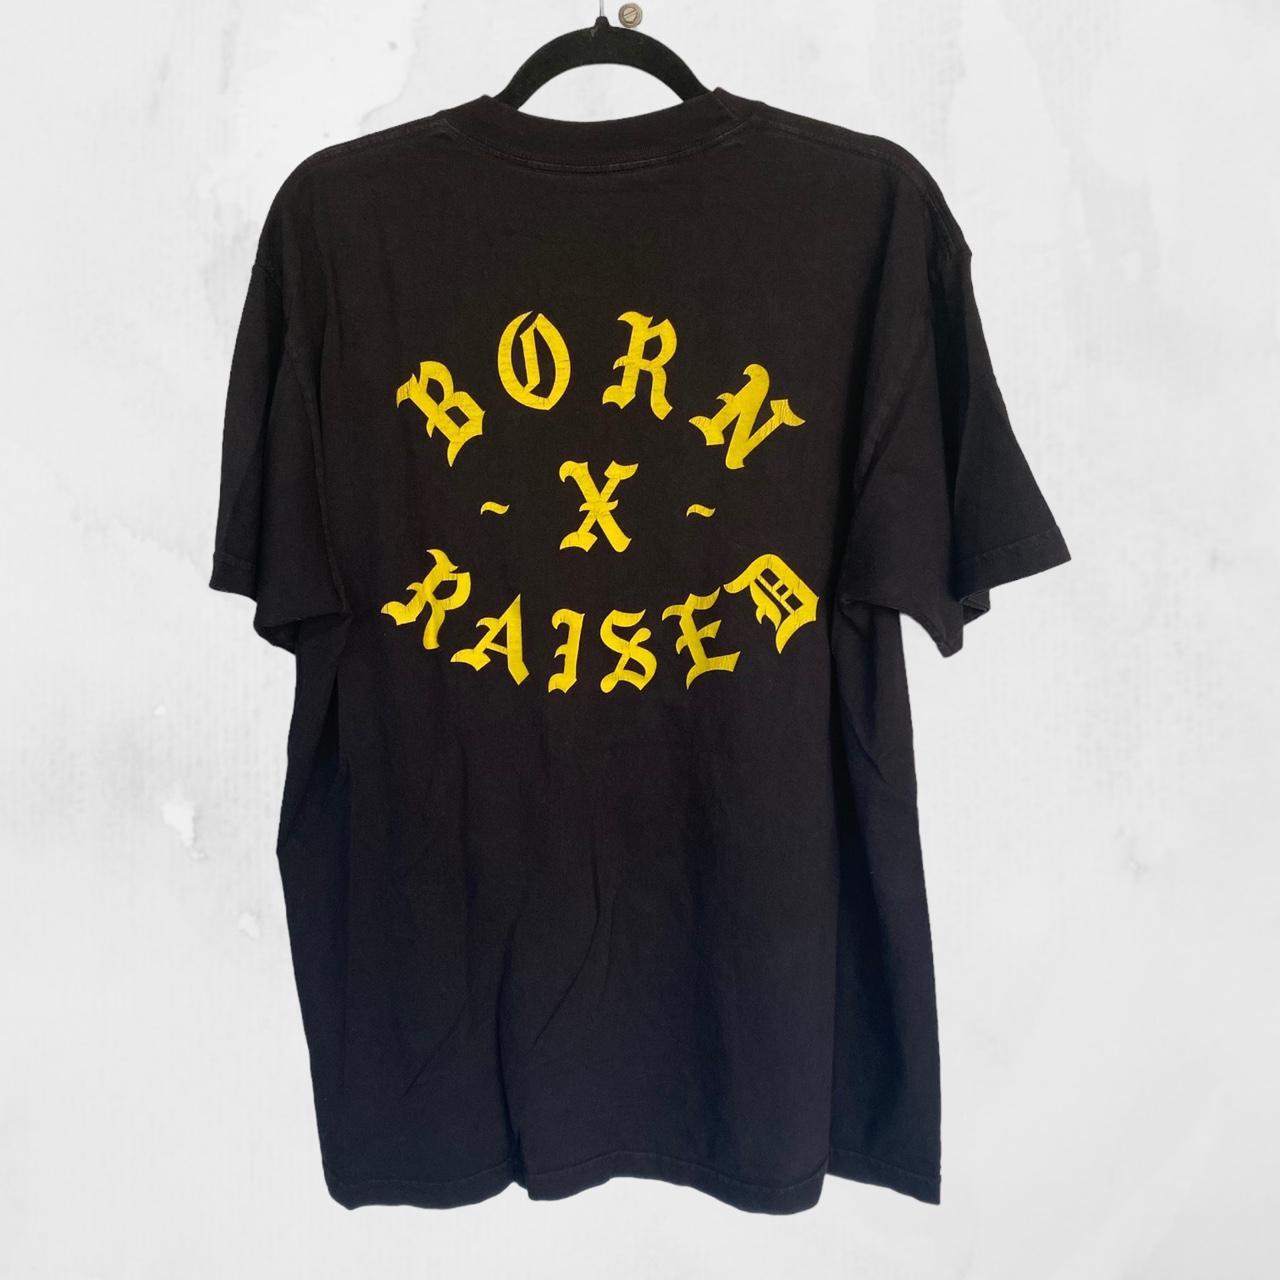 Born x Raised Men's Black and Yellow T-shirt (2)